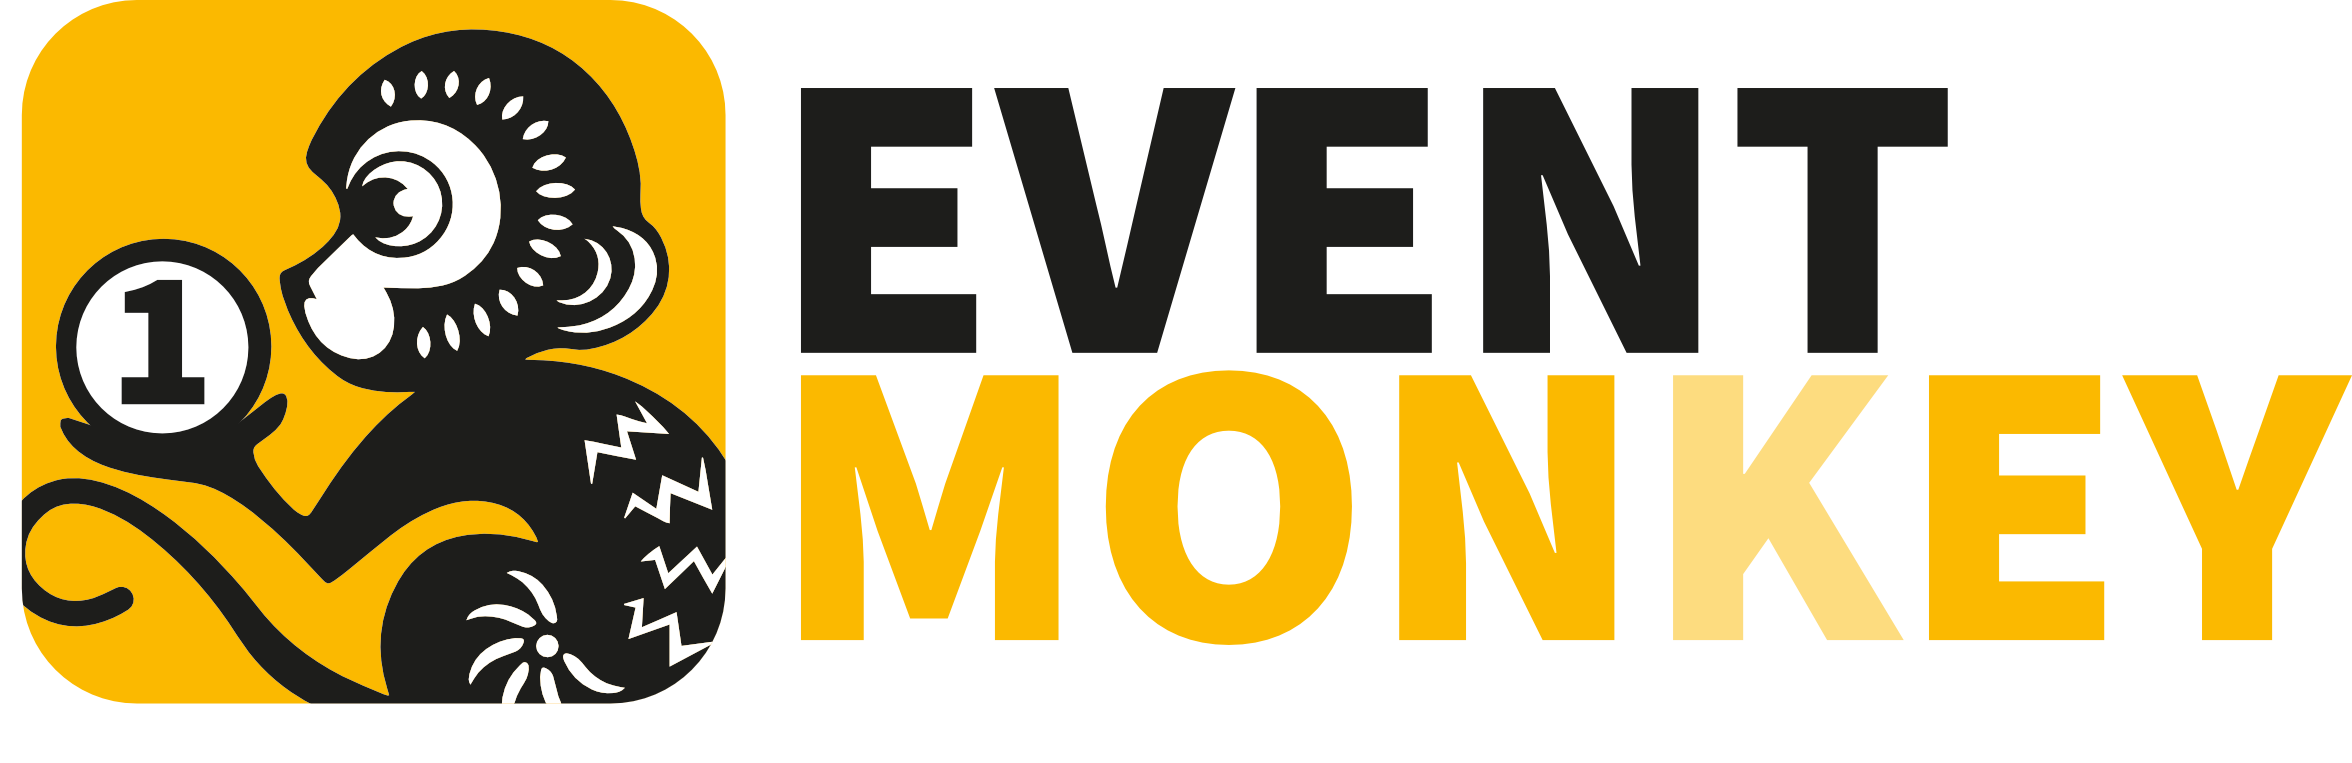 Event Monkey Logo